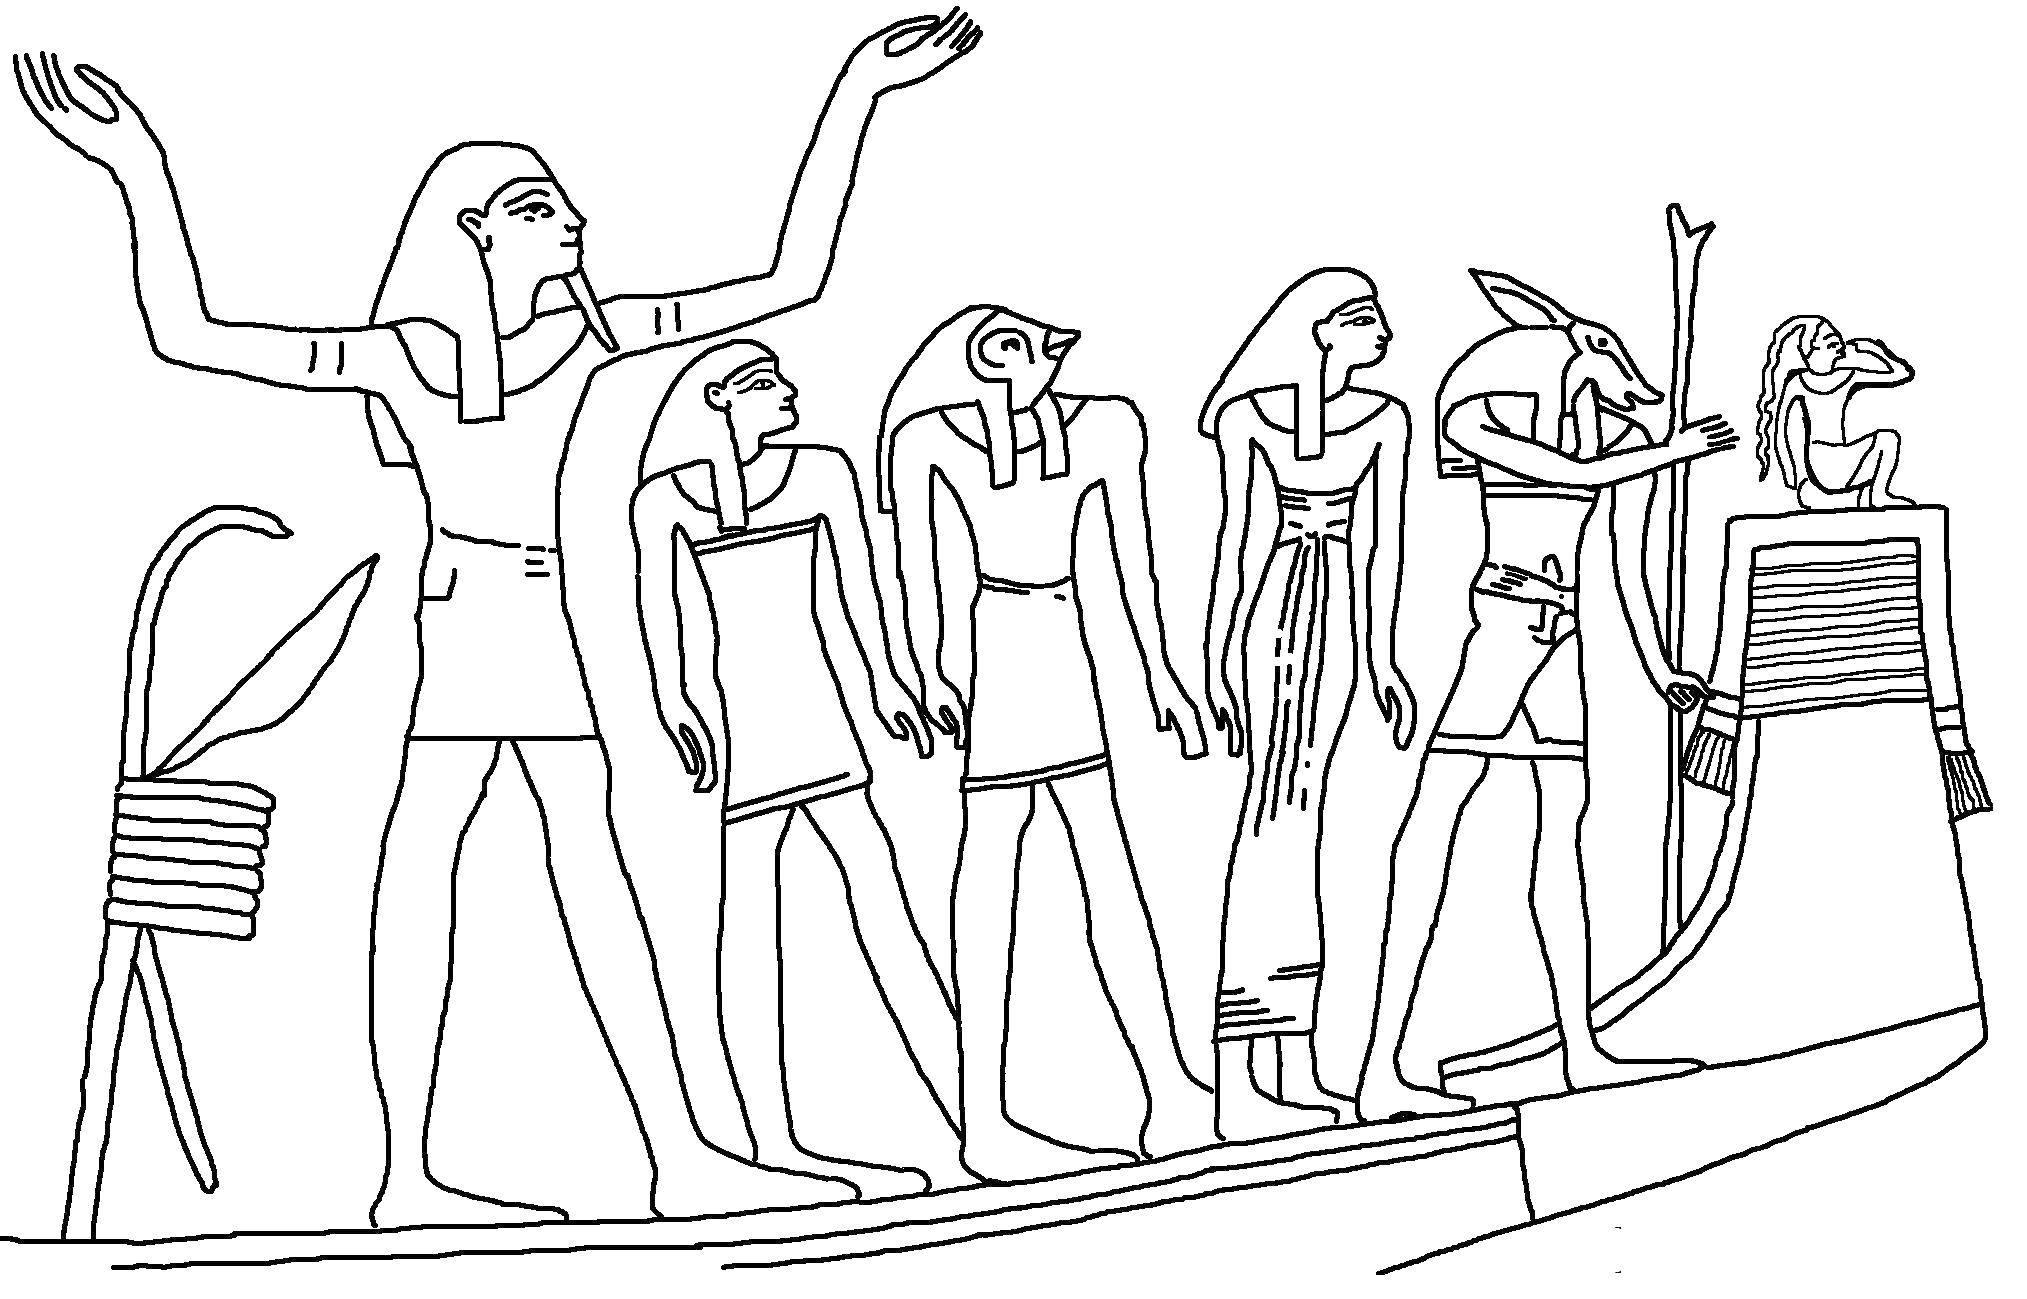 Coloring Egyptian pharaohs. Category The mummy. Tags:  the mummy, Pharaoh, Egypt.